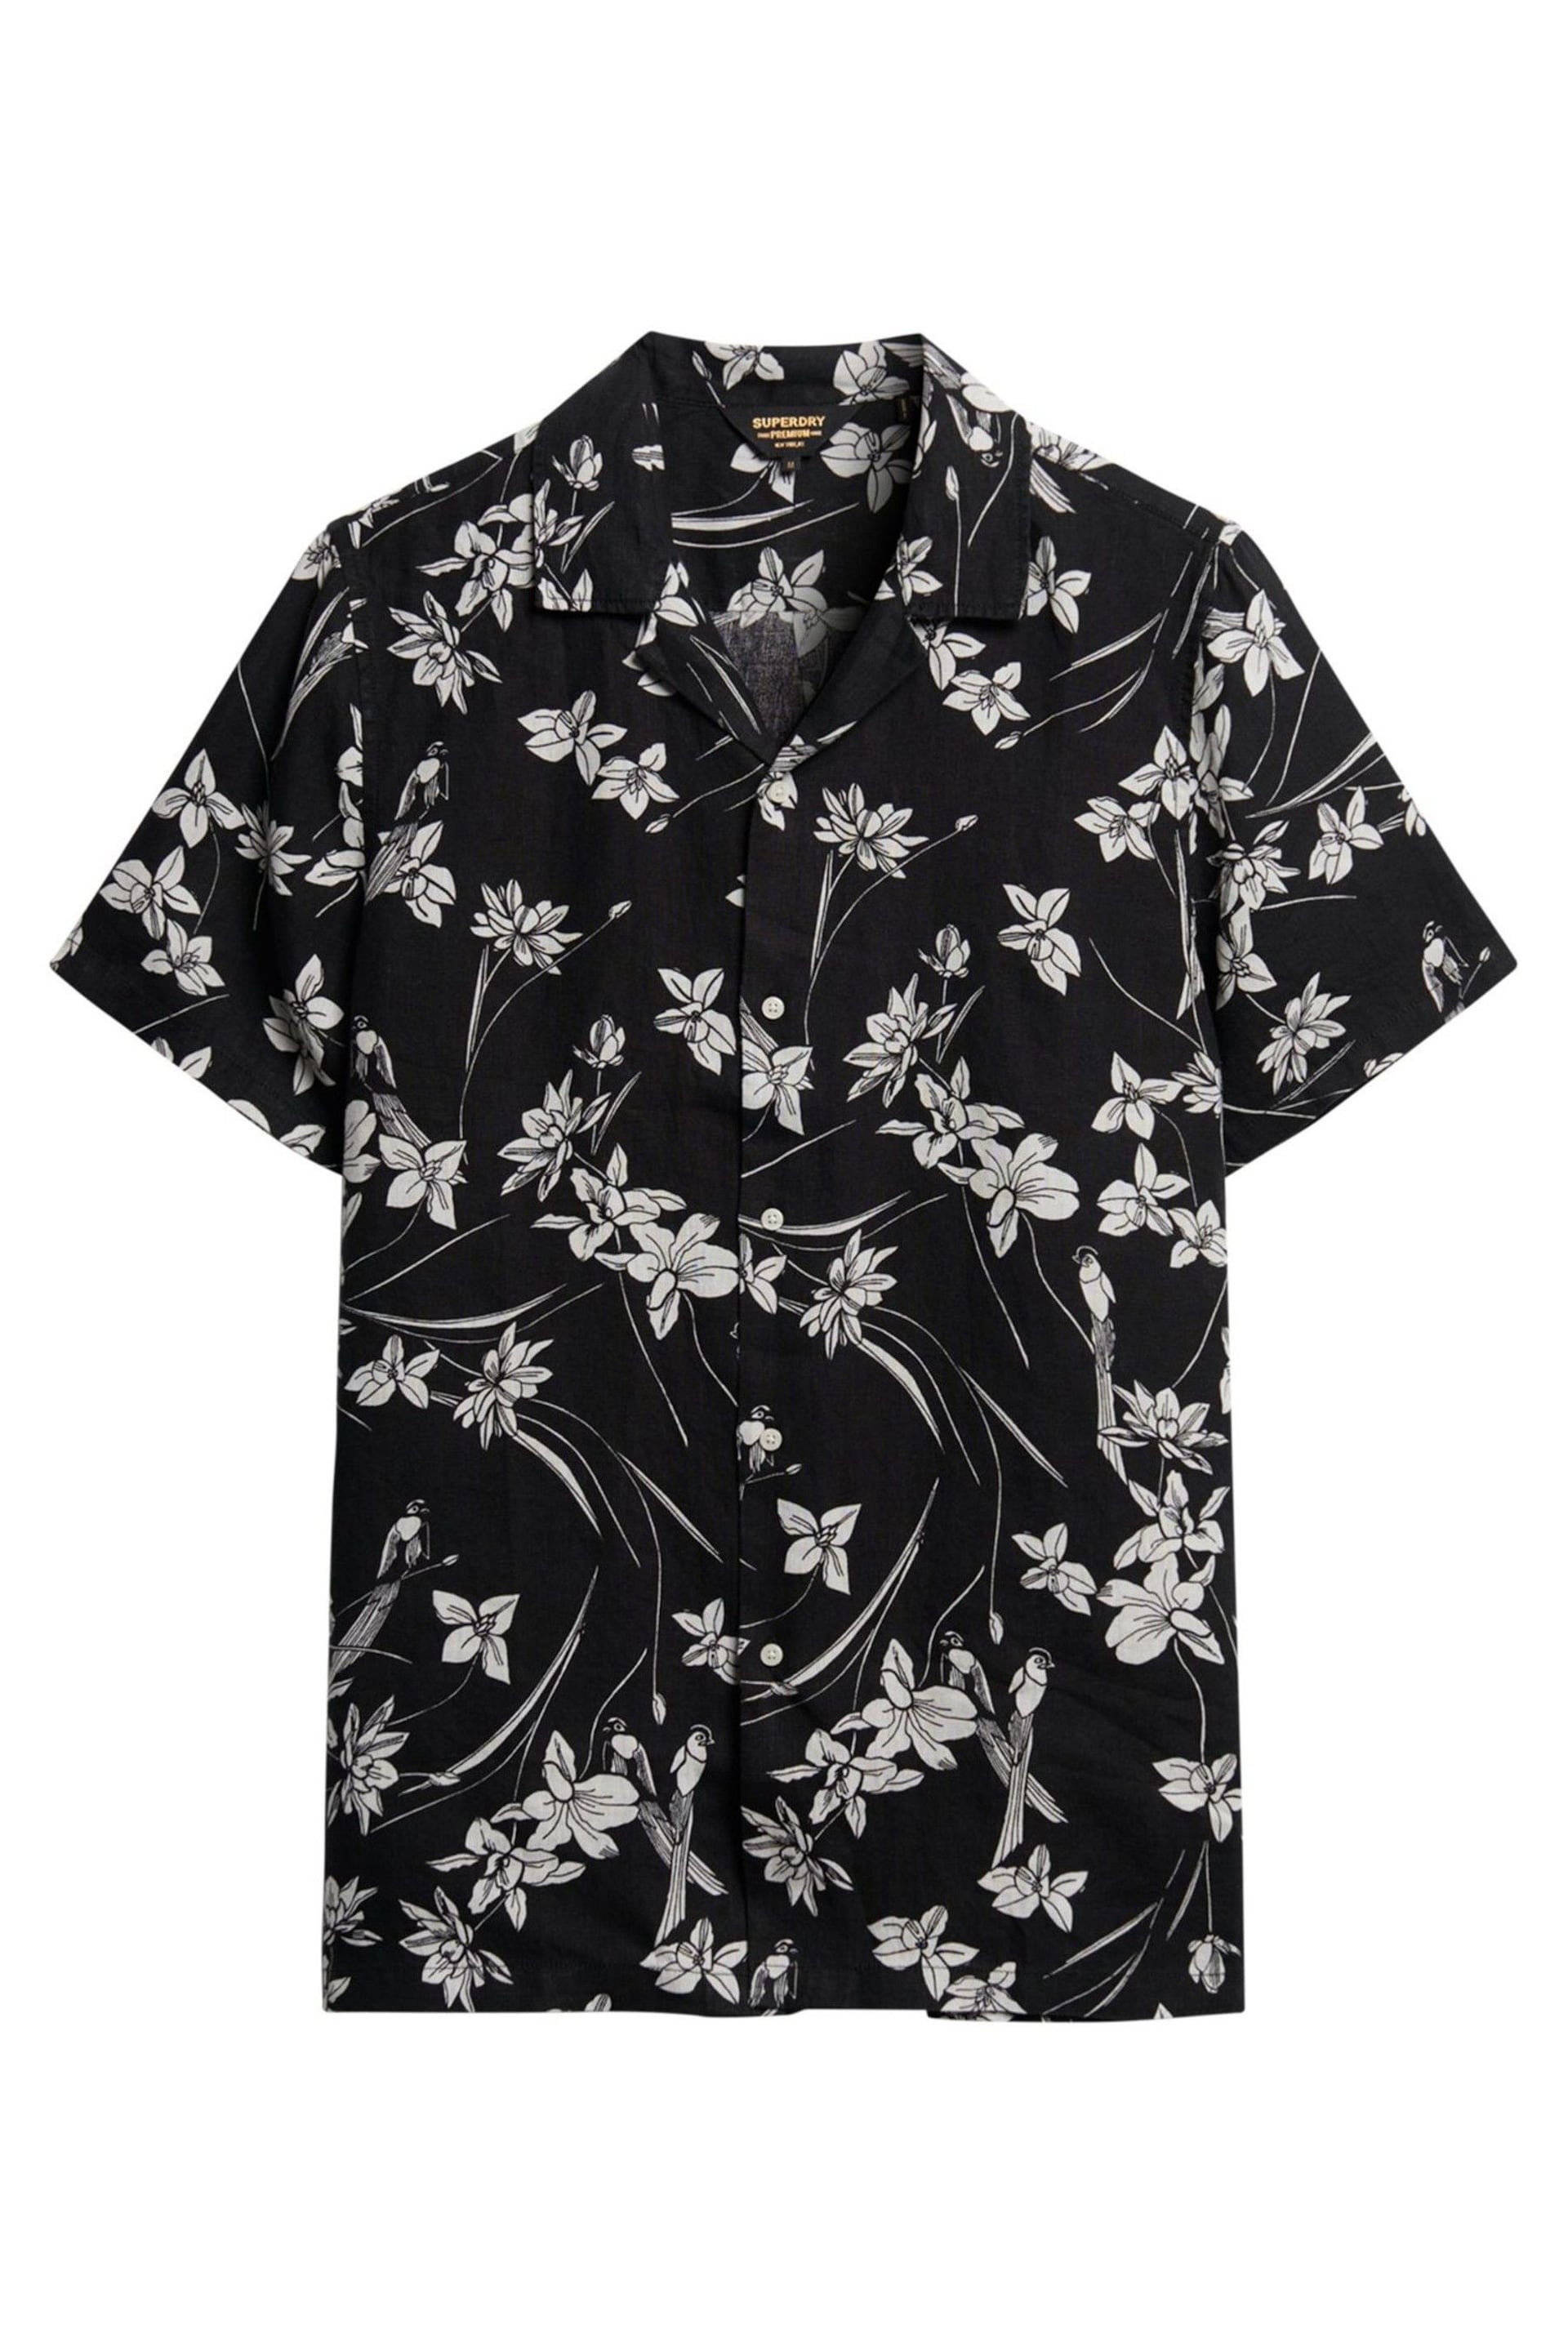 Superdry Black Open Collar Print Linen Shirt - Image 4 of 6